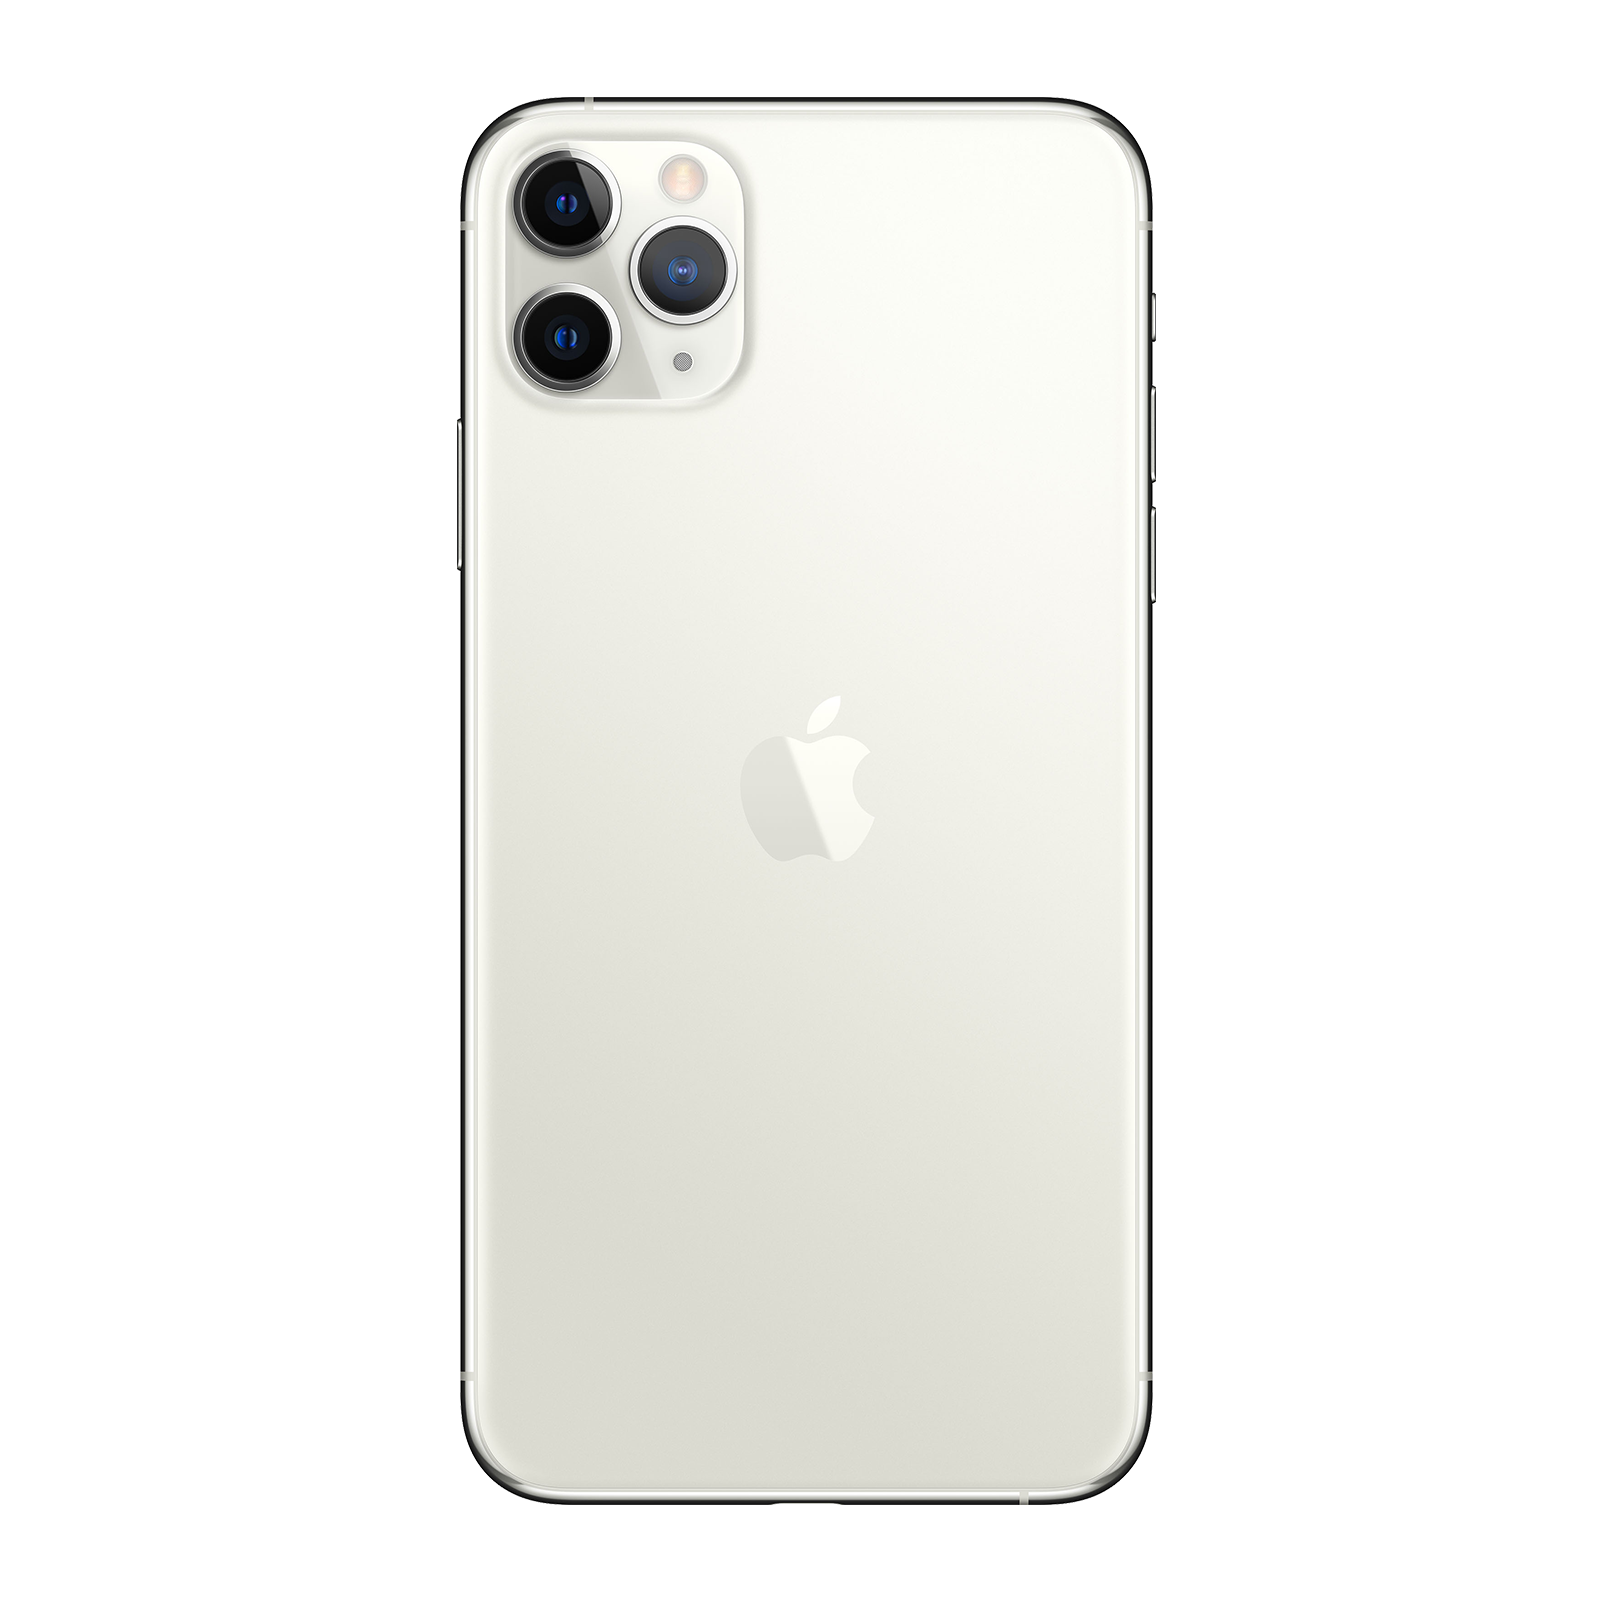 Apple iPhone 11 Pro 64GB Silver Very Good - Sprint